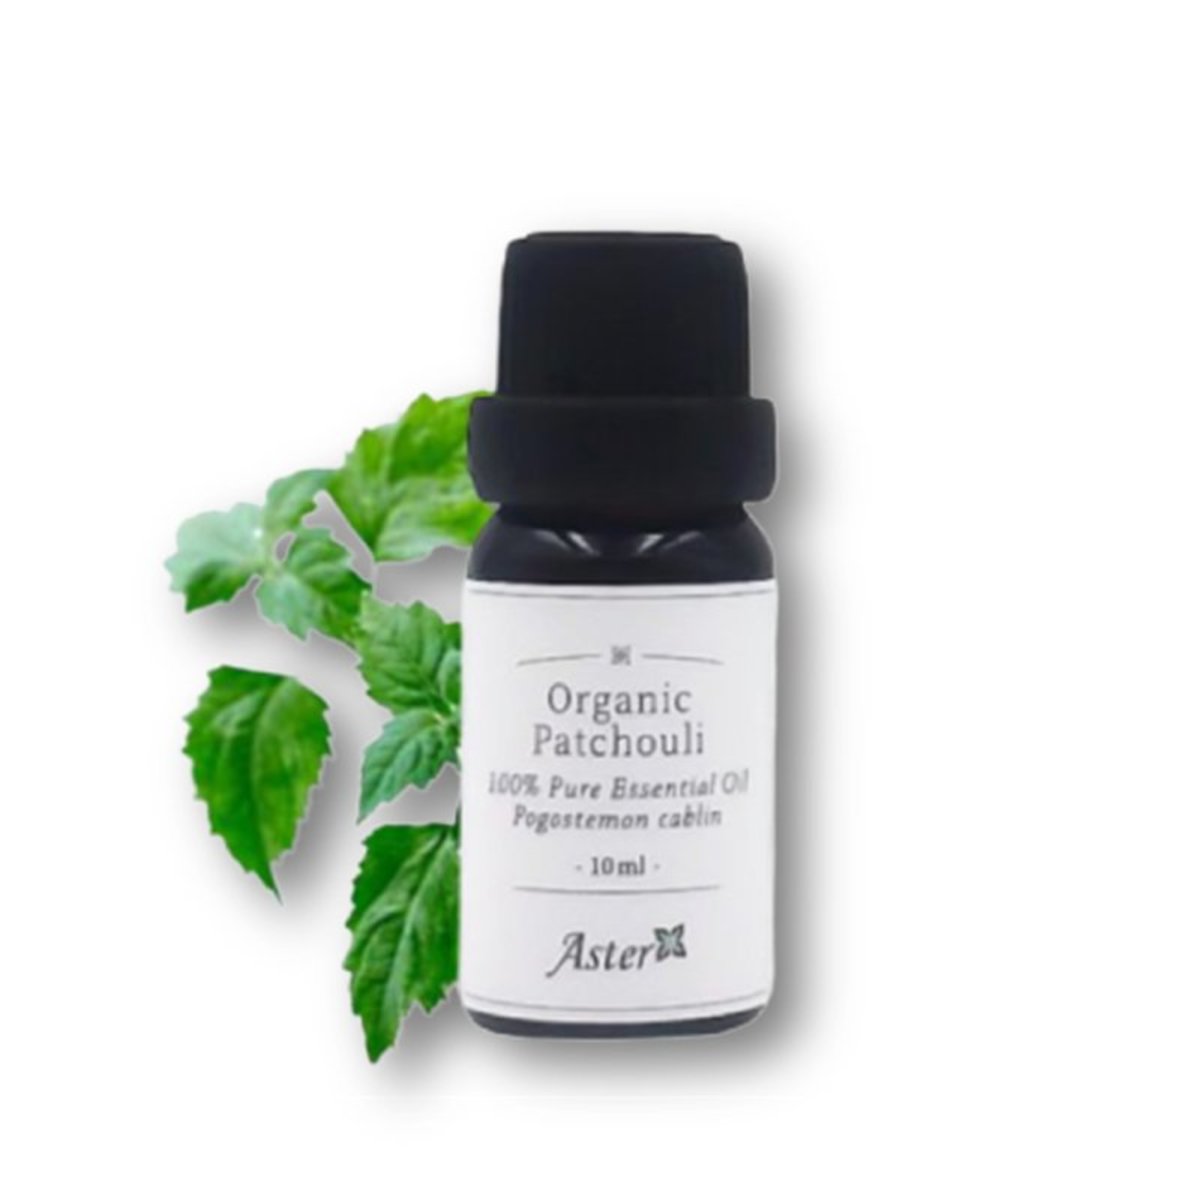 Organic Patchouli Essential Oil (Pogostemon patchouli) - 10ml